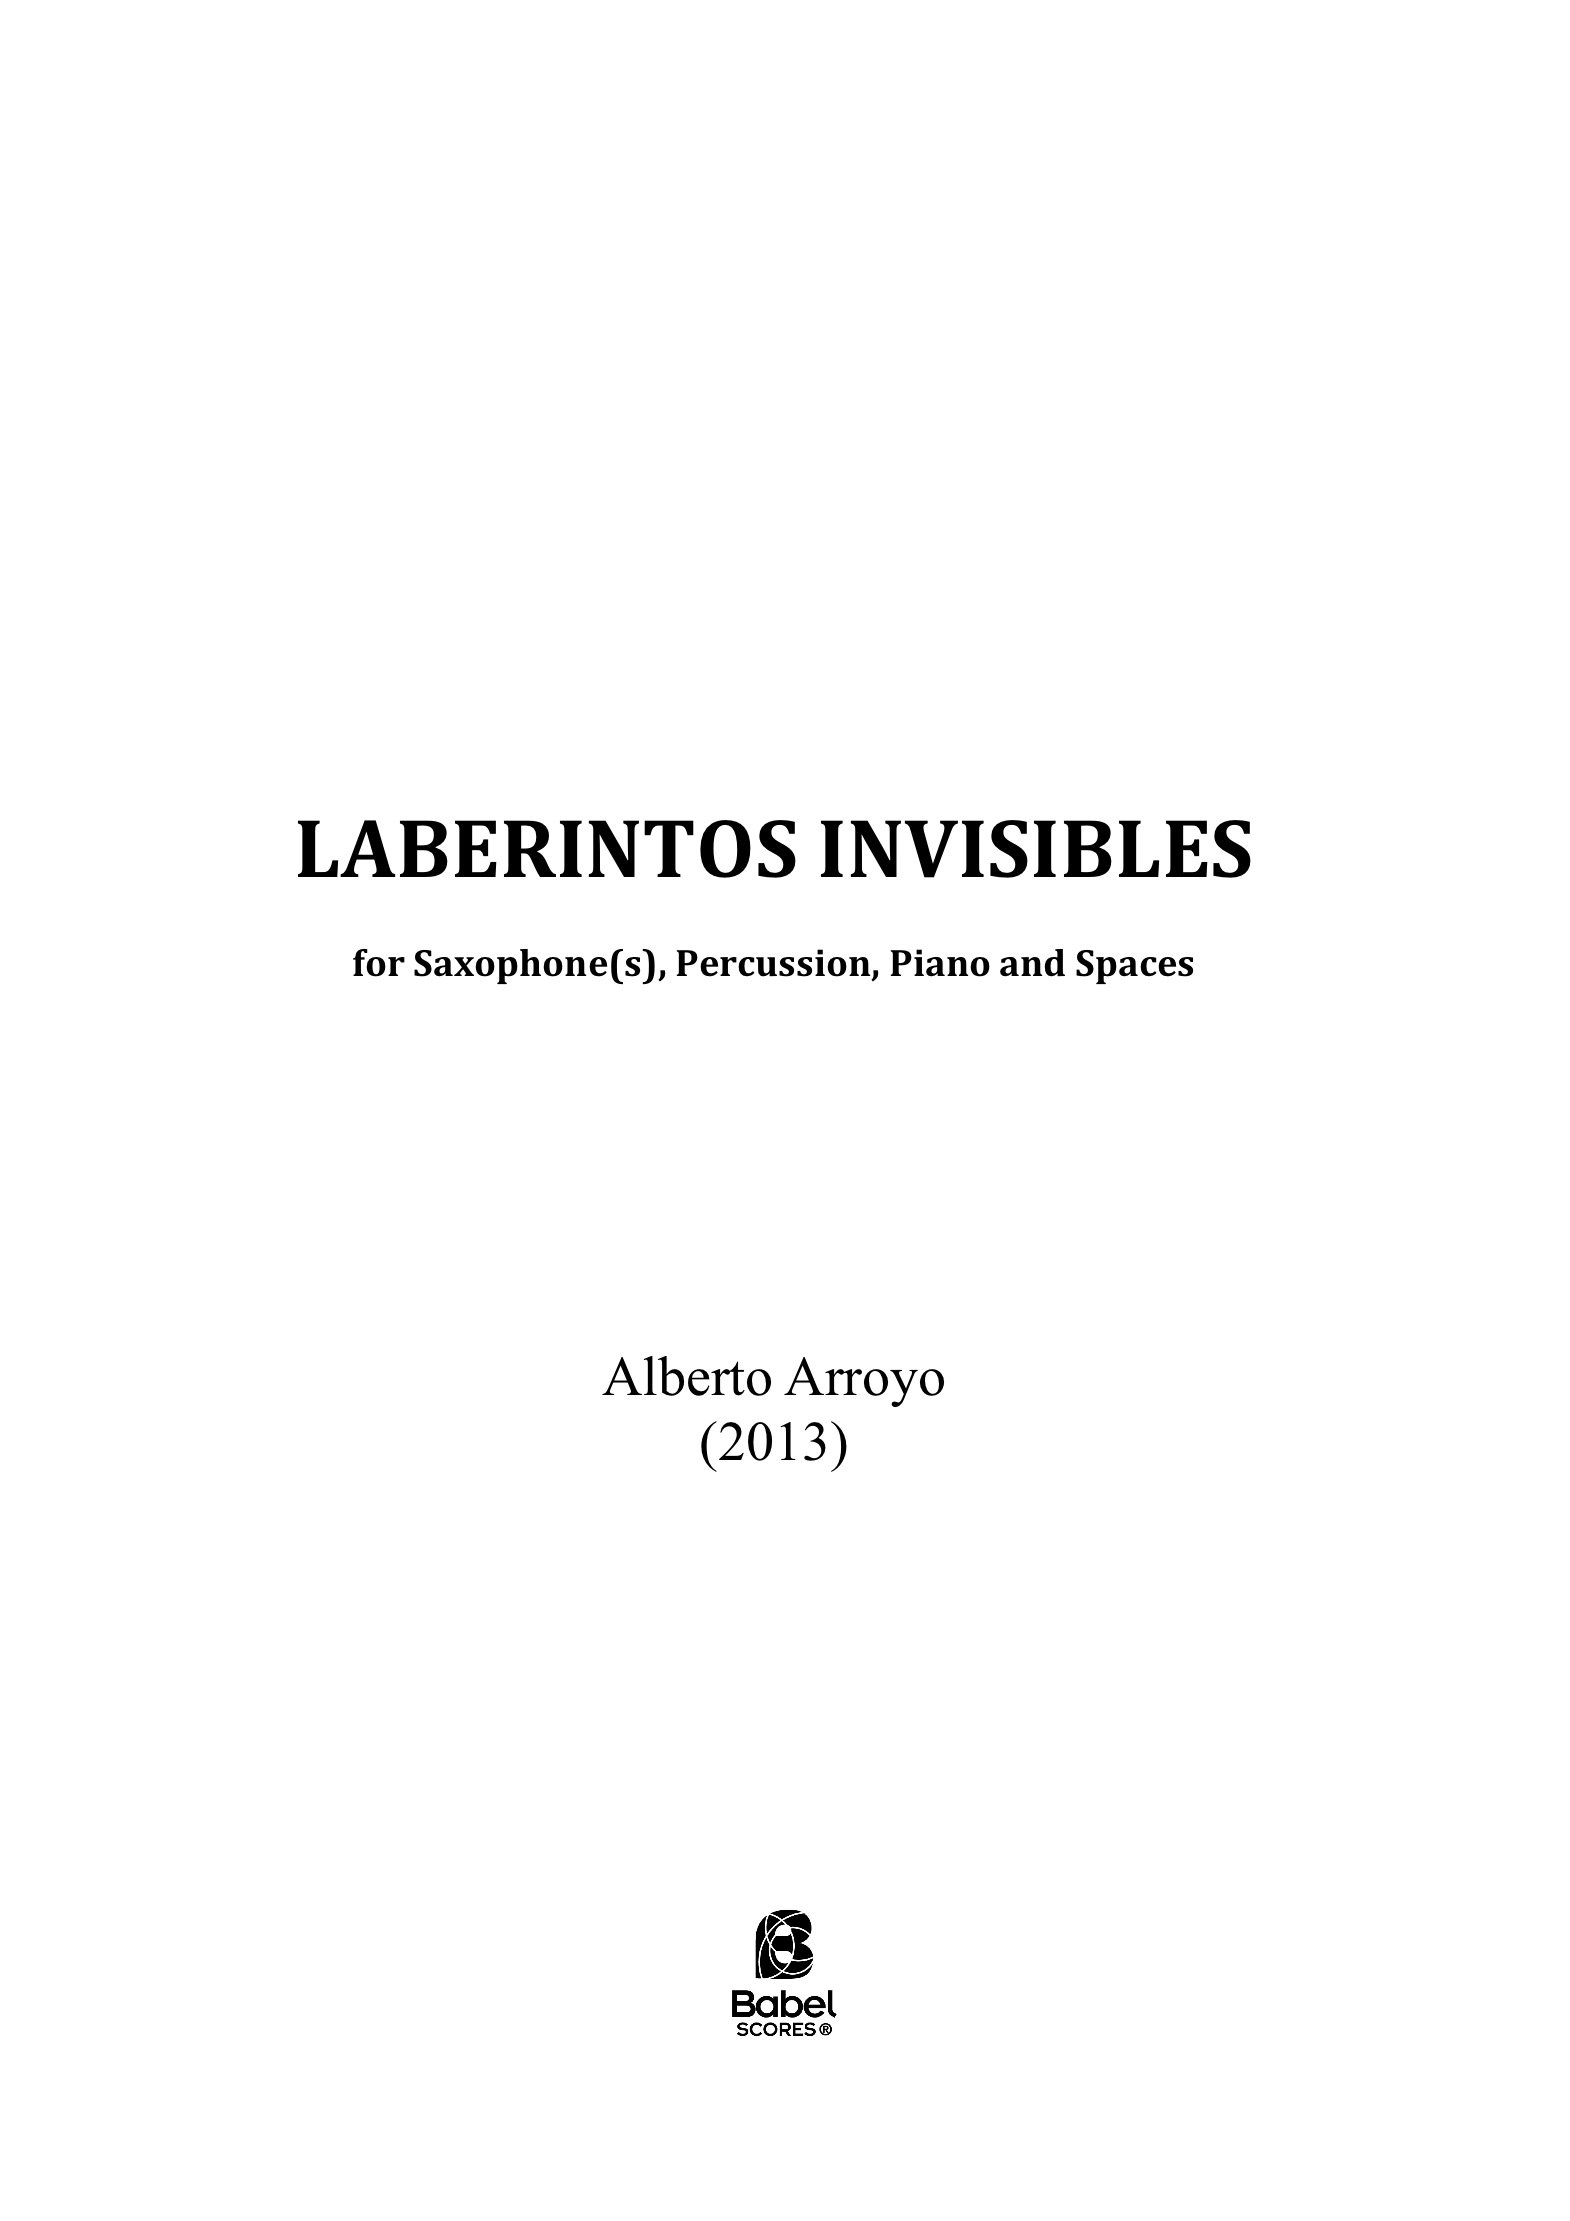 Laberintos invisibles A4 z